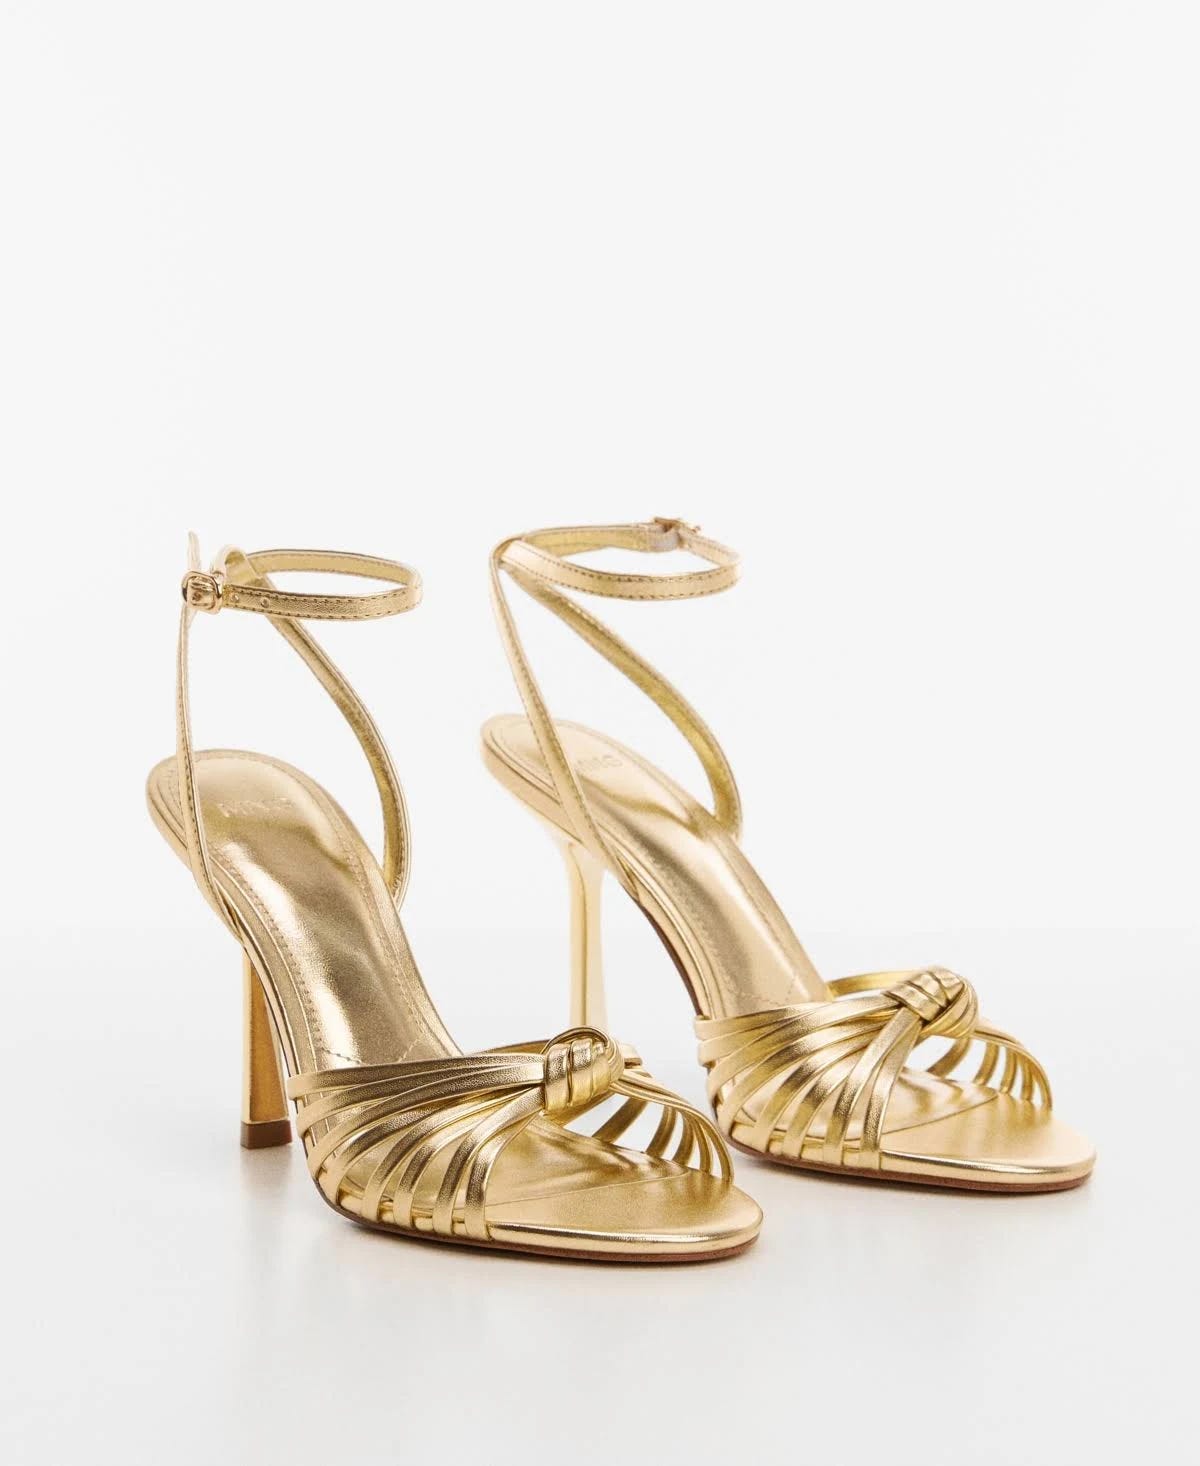 Gold High Heel Sandals for Women | Image